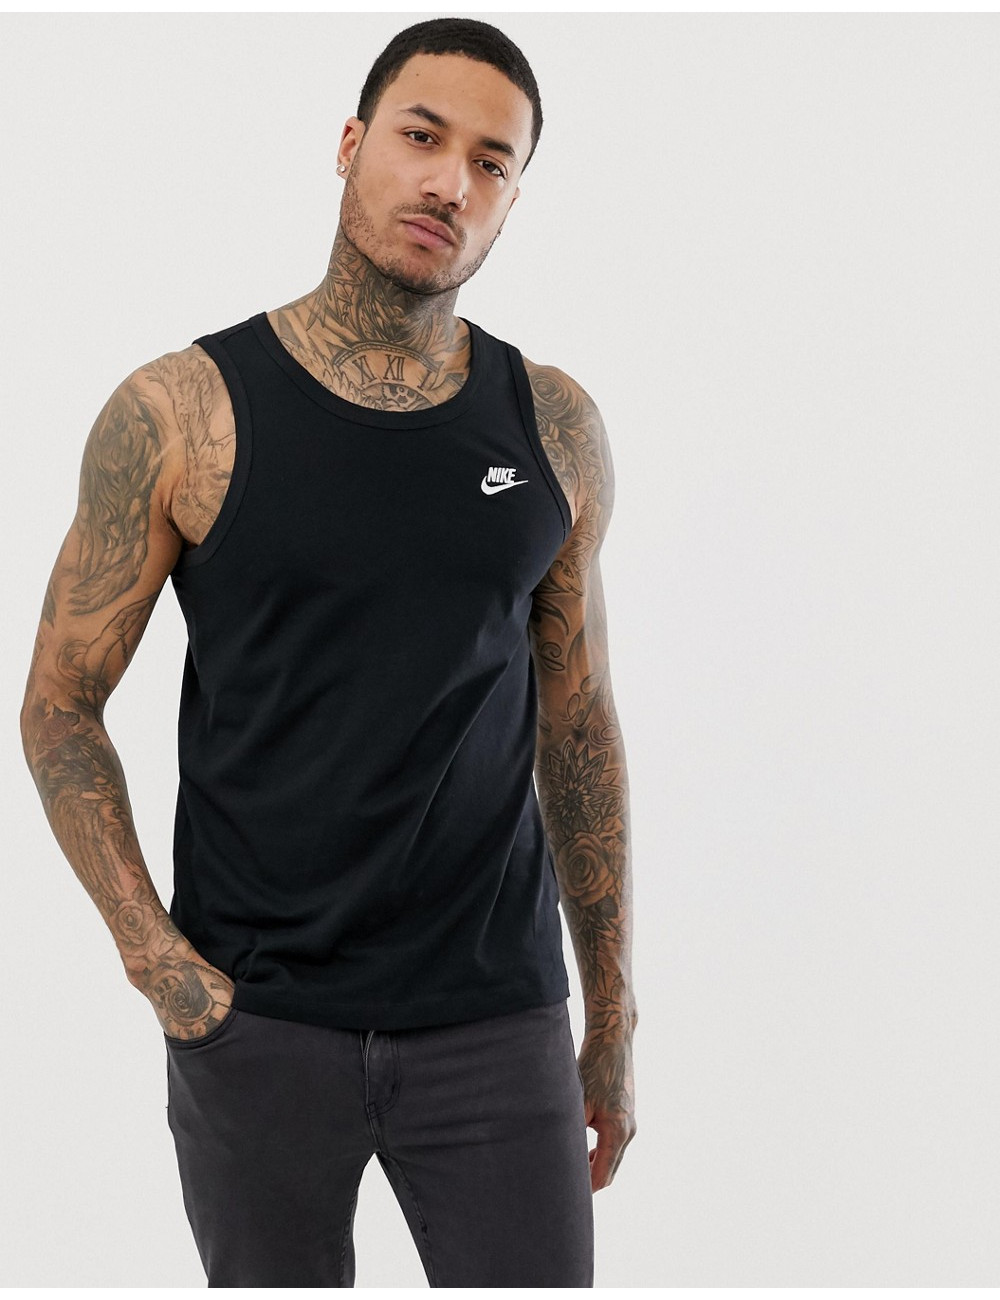 Nike Club vest in black